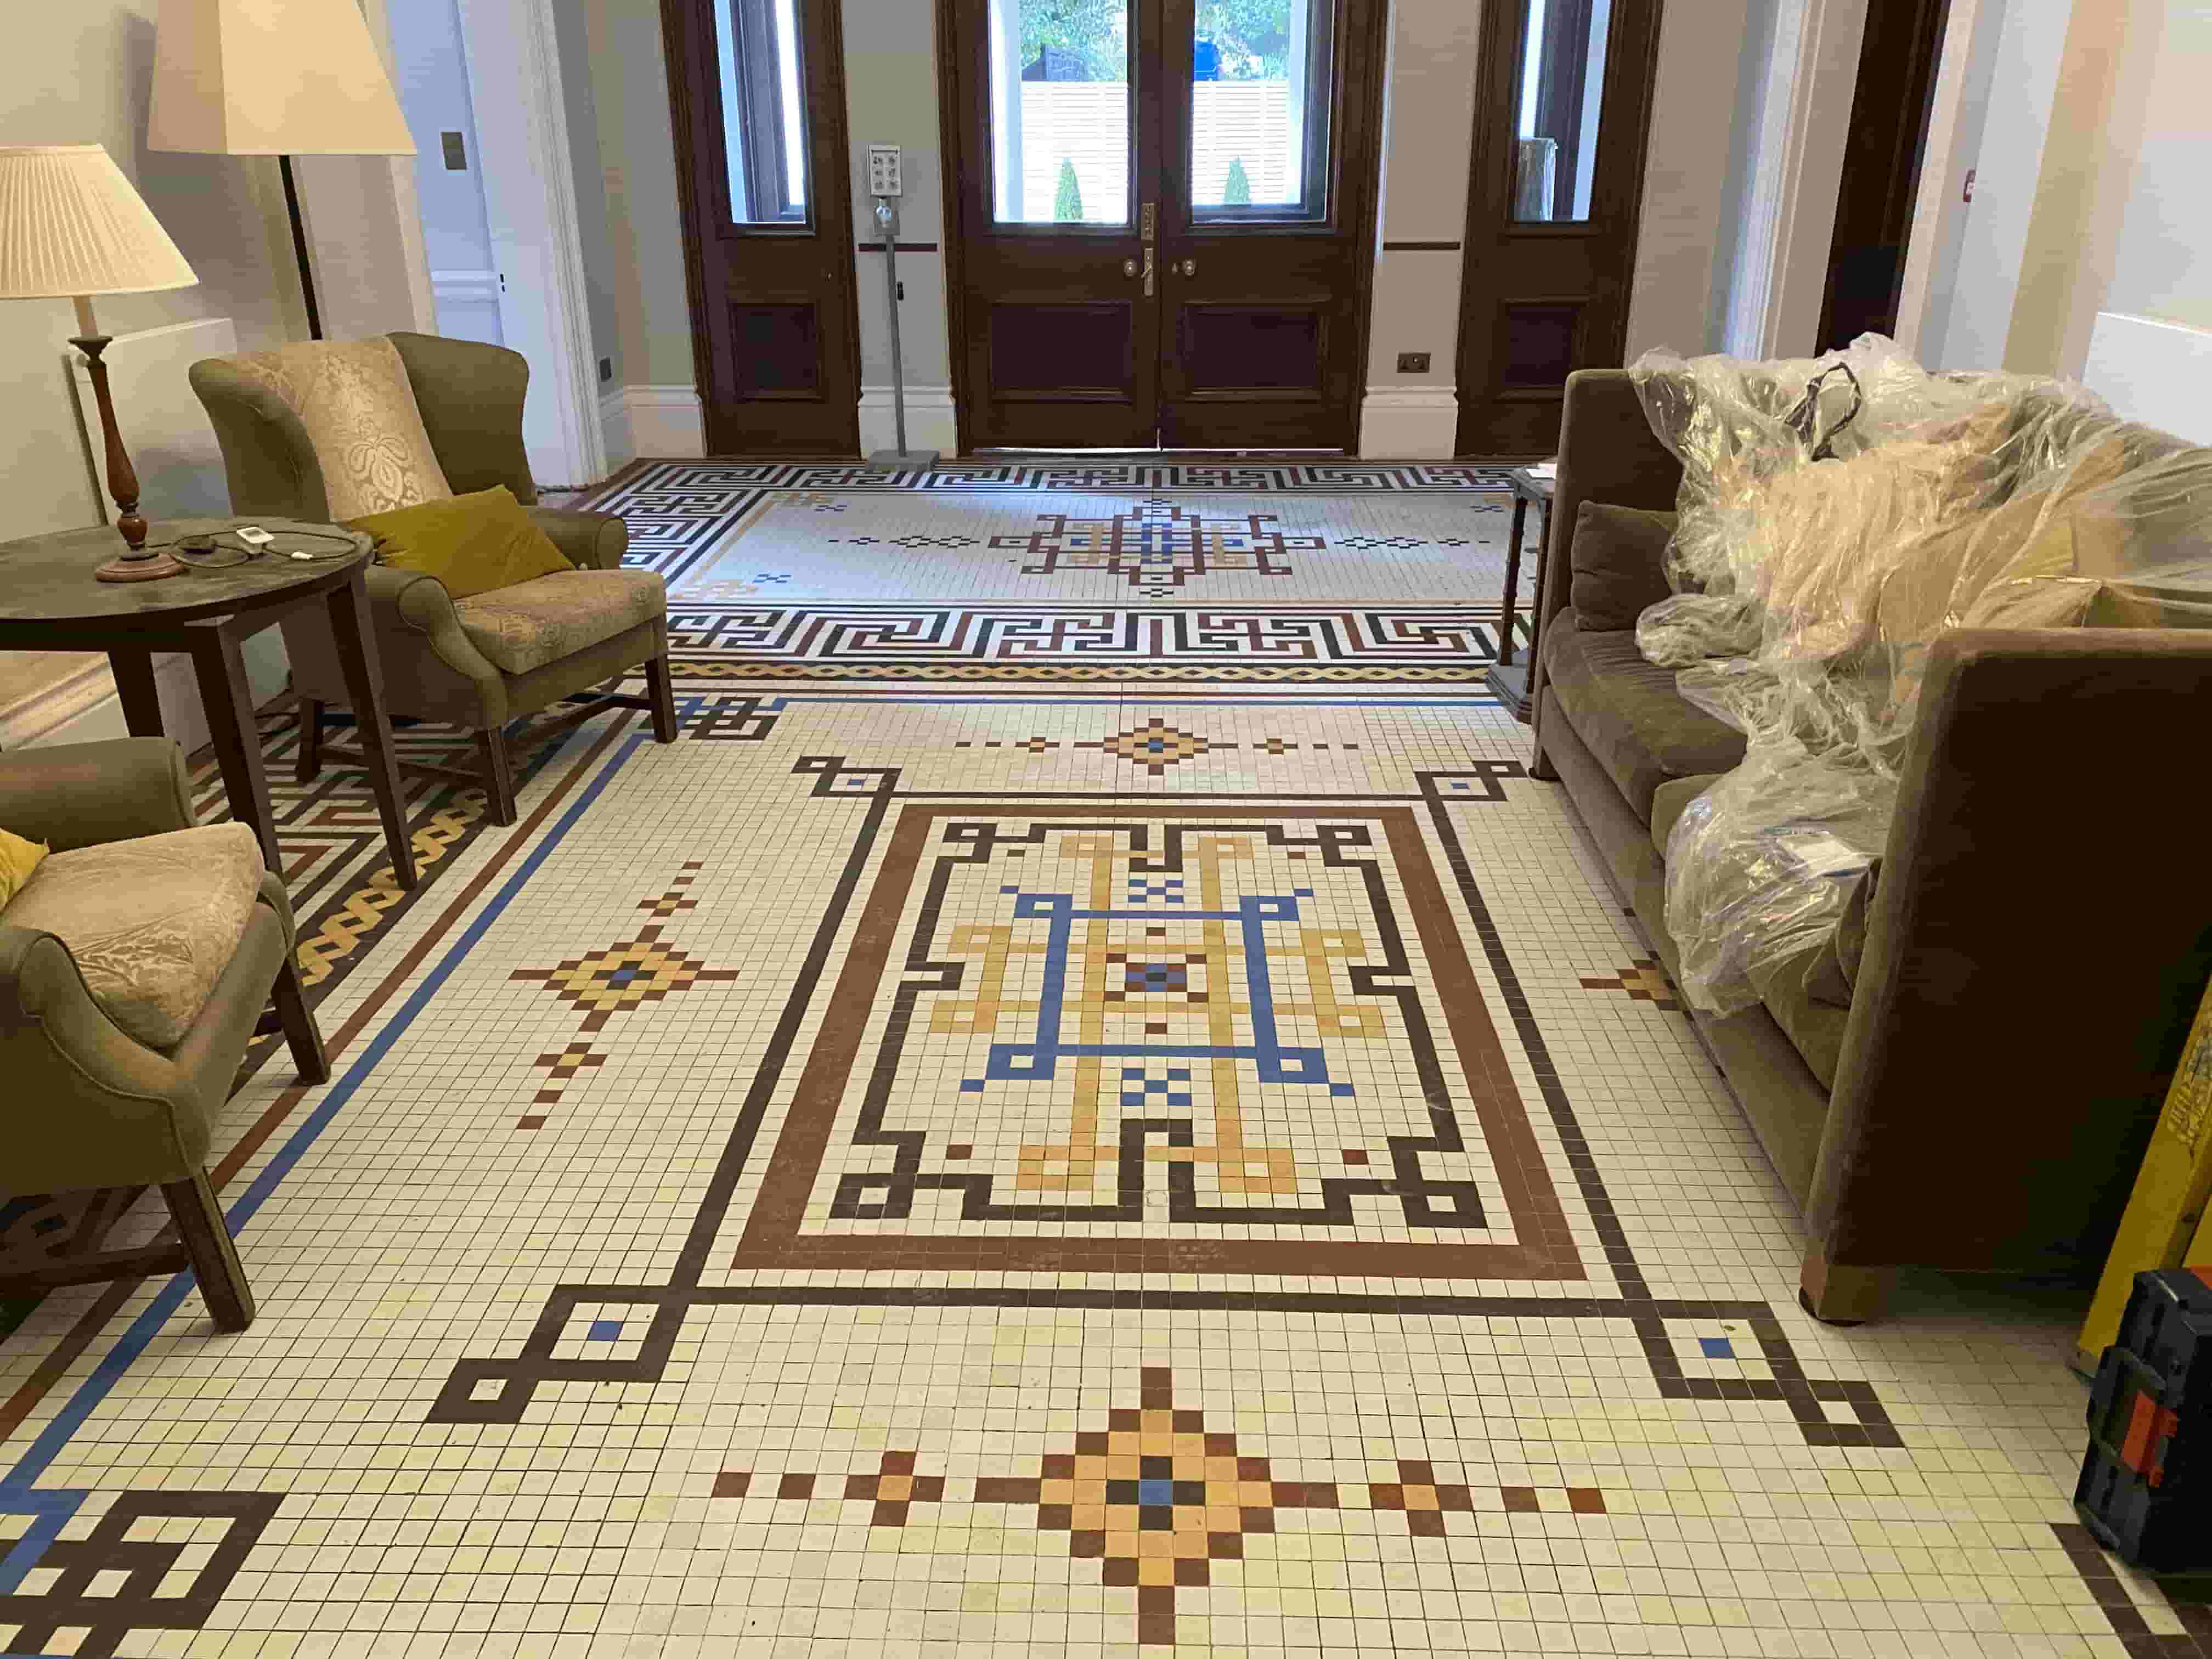 Hotel Tesserae Stone Mosaic Tiled Floor Before Renovation Taplow